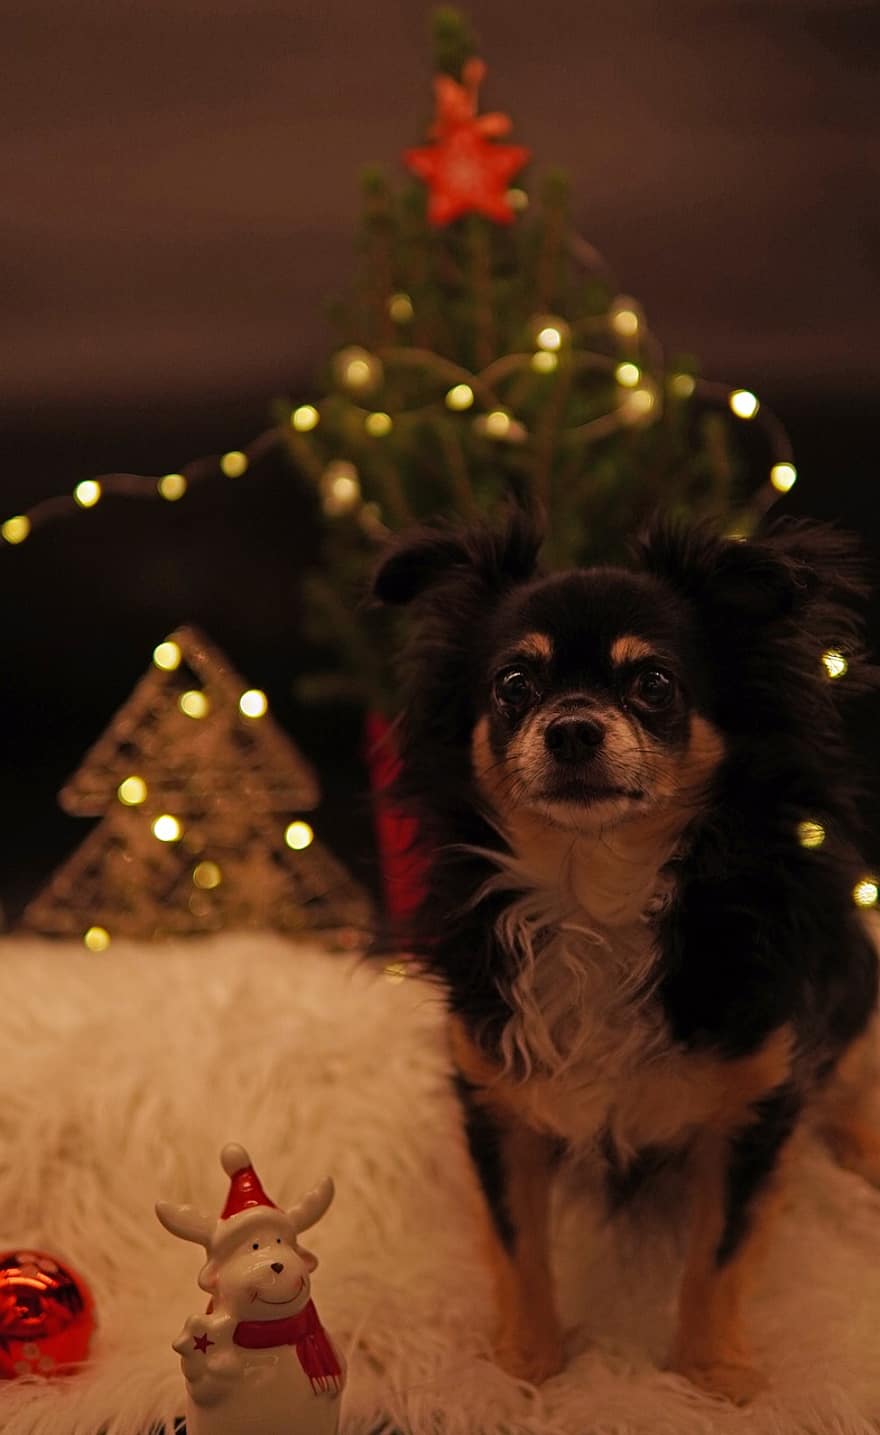 कुत्ता, चिहुआहुआ, देवदार के पेड़, क्रिसमस, छुट्टी मुबारक हो, क्रिसमस कार्ड, दीपक, क्रिसमस की सजावट, जानवर, प्यारा